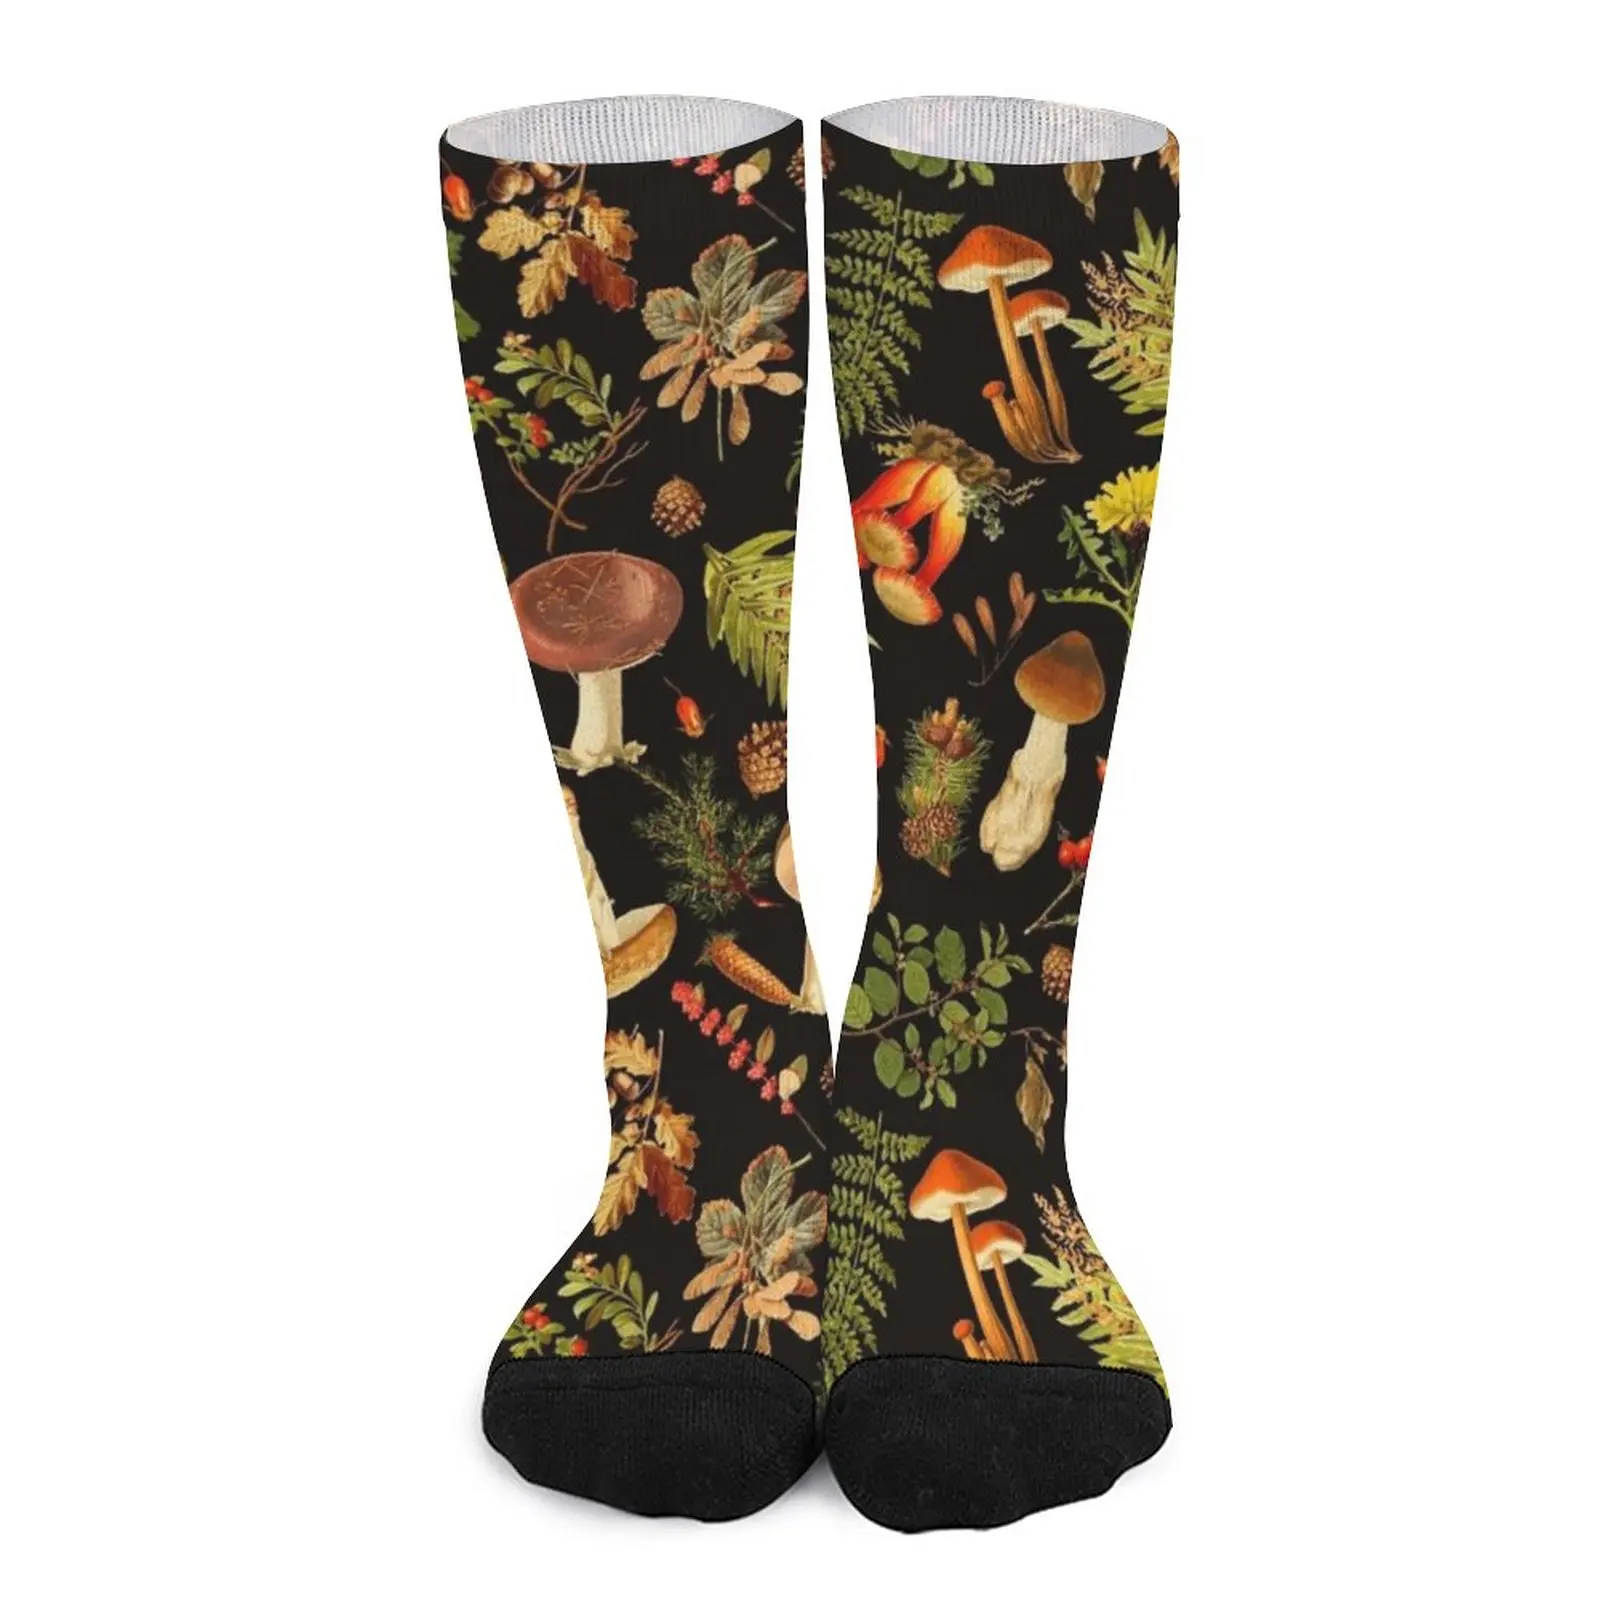 Vintage toxic mushrooms forest pattern on black Socks Women's compression socks sock men